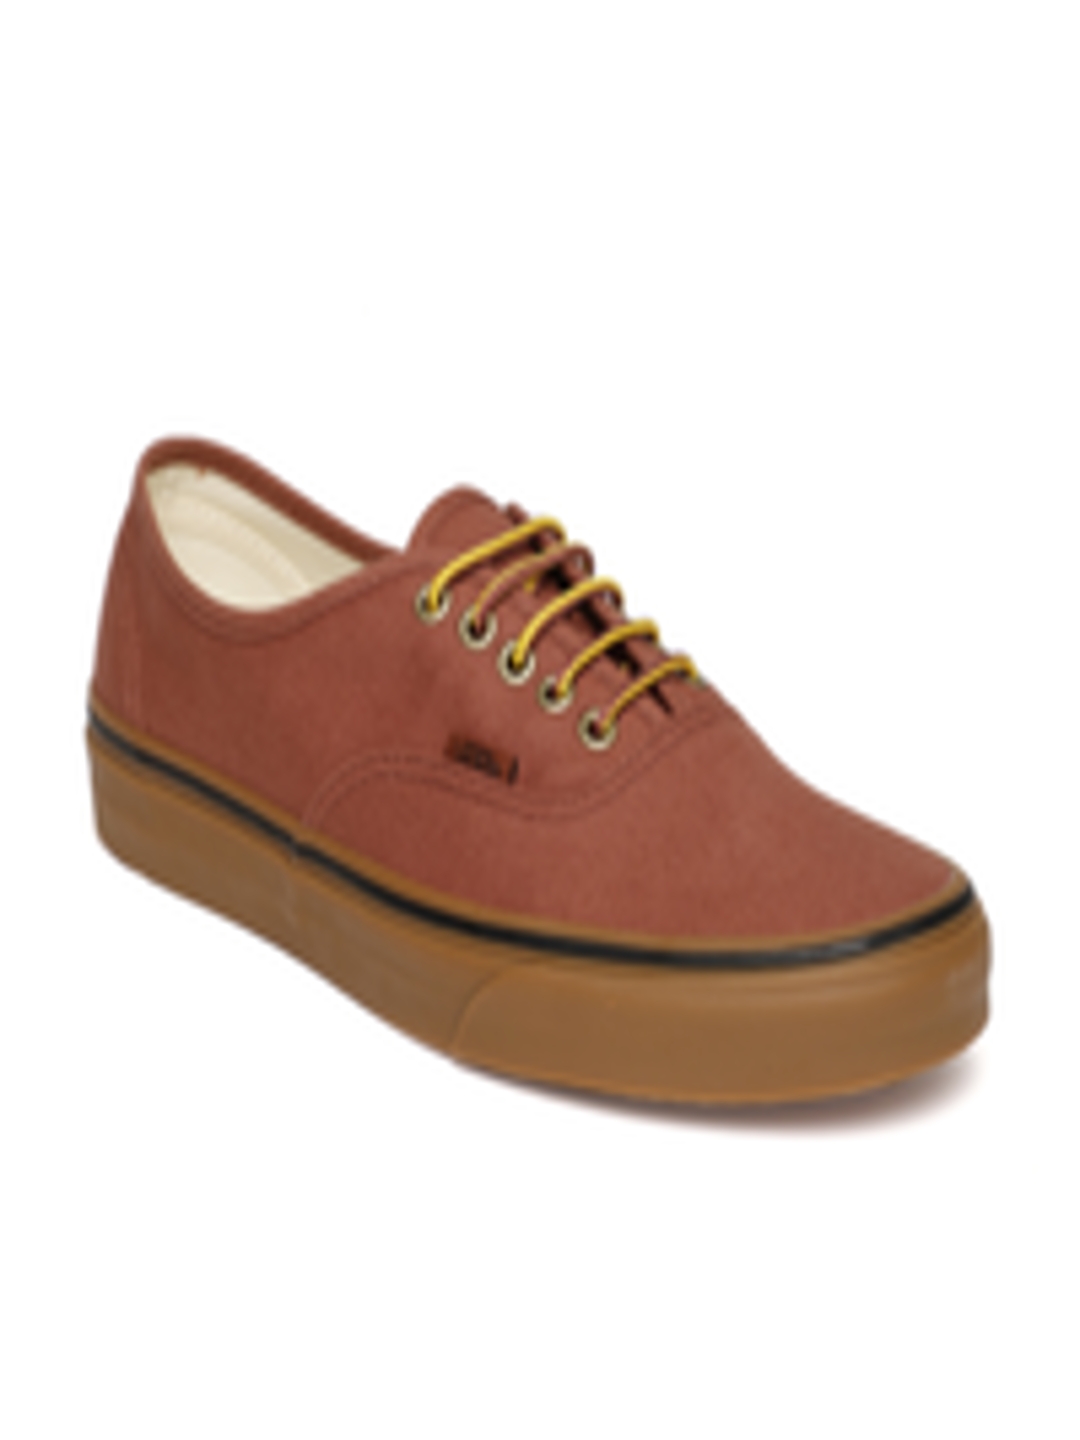 Buy Vans Unisex Brown Sneakers - Casual Shoes for Unisex 8603617 | Myntra